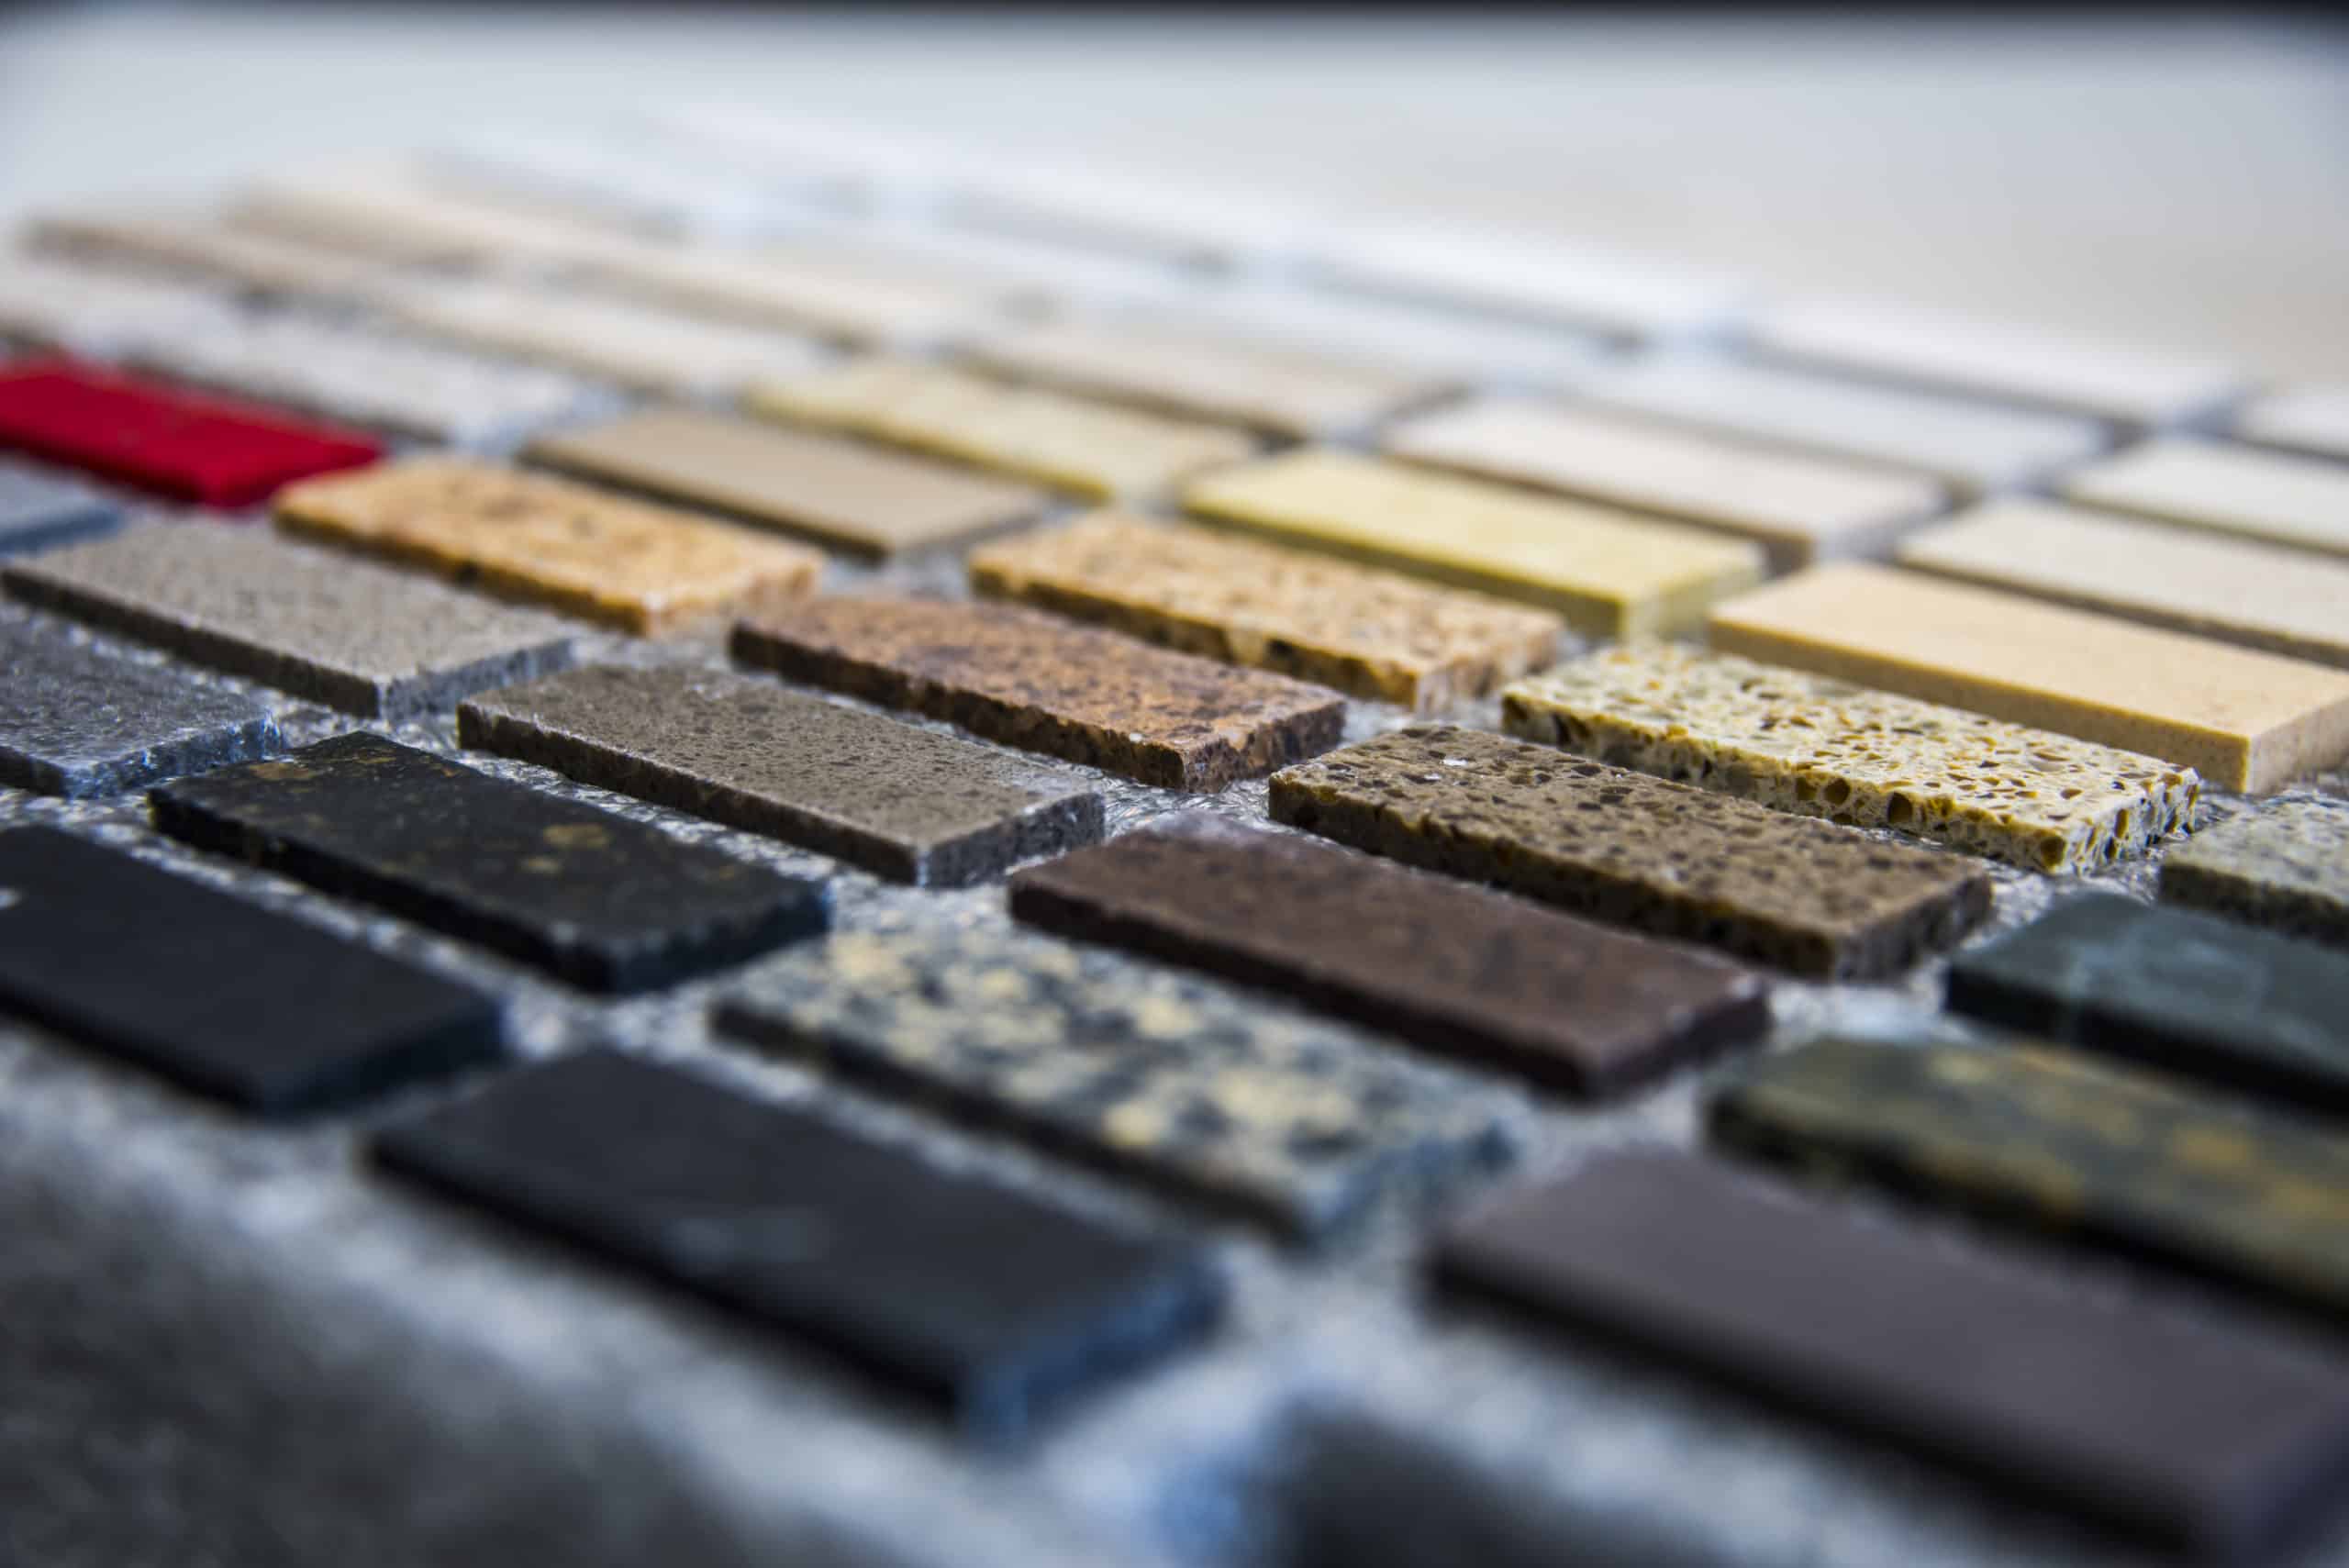 Granite counter top samplings arrayed on table